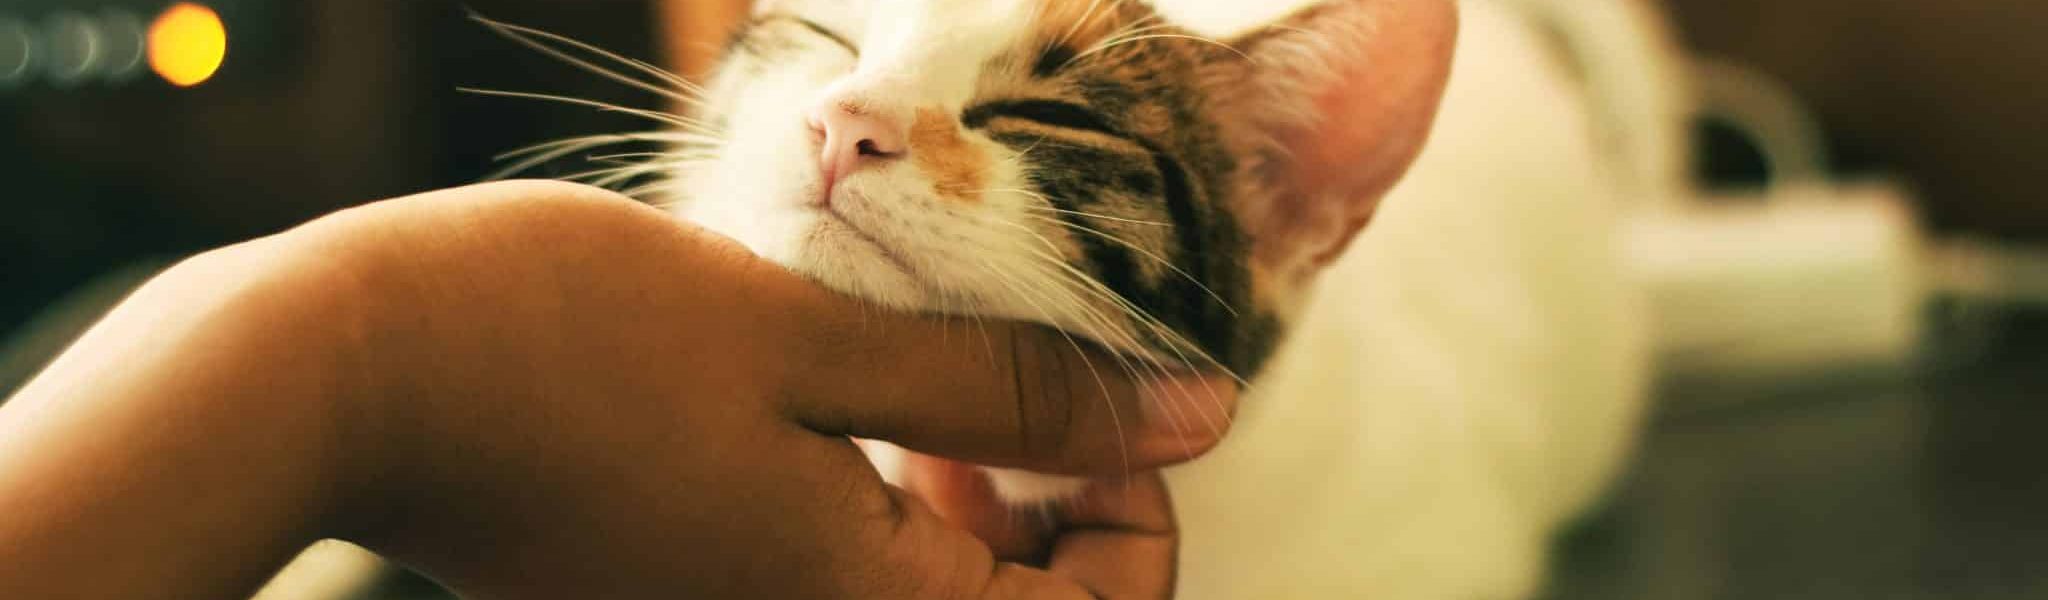 Hand scratching cat under chin